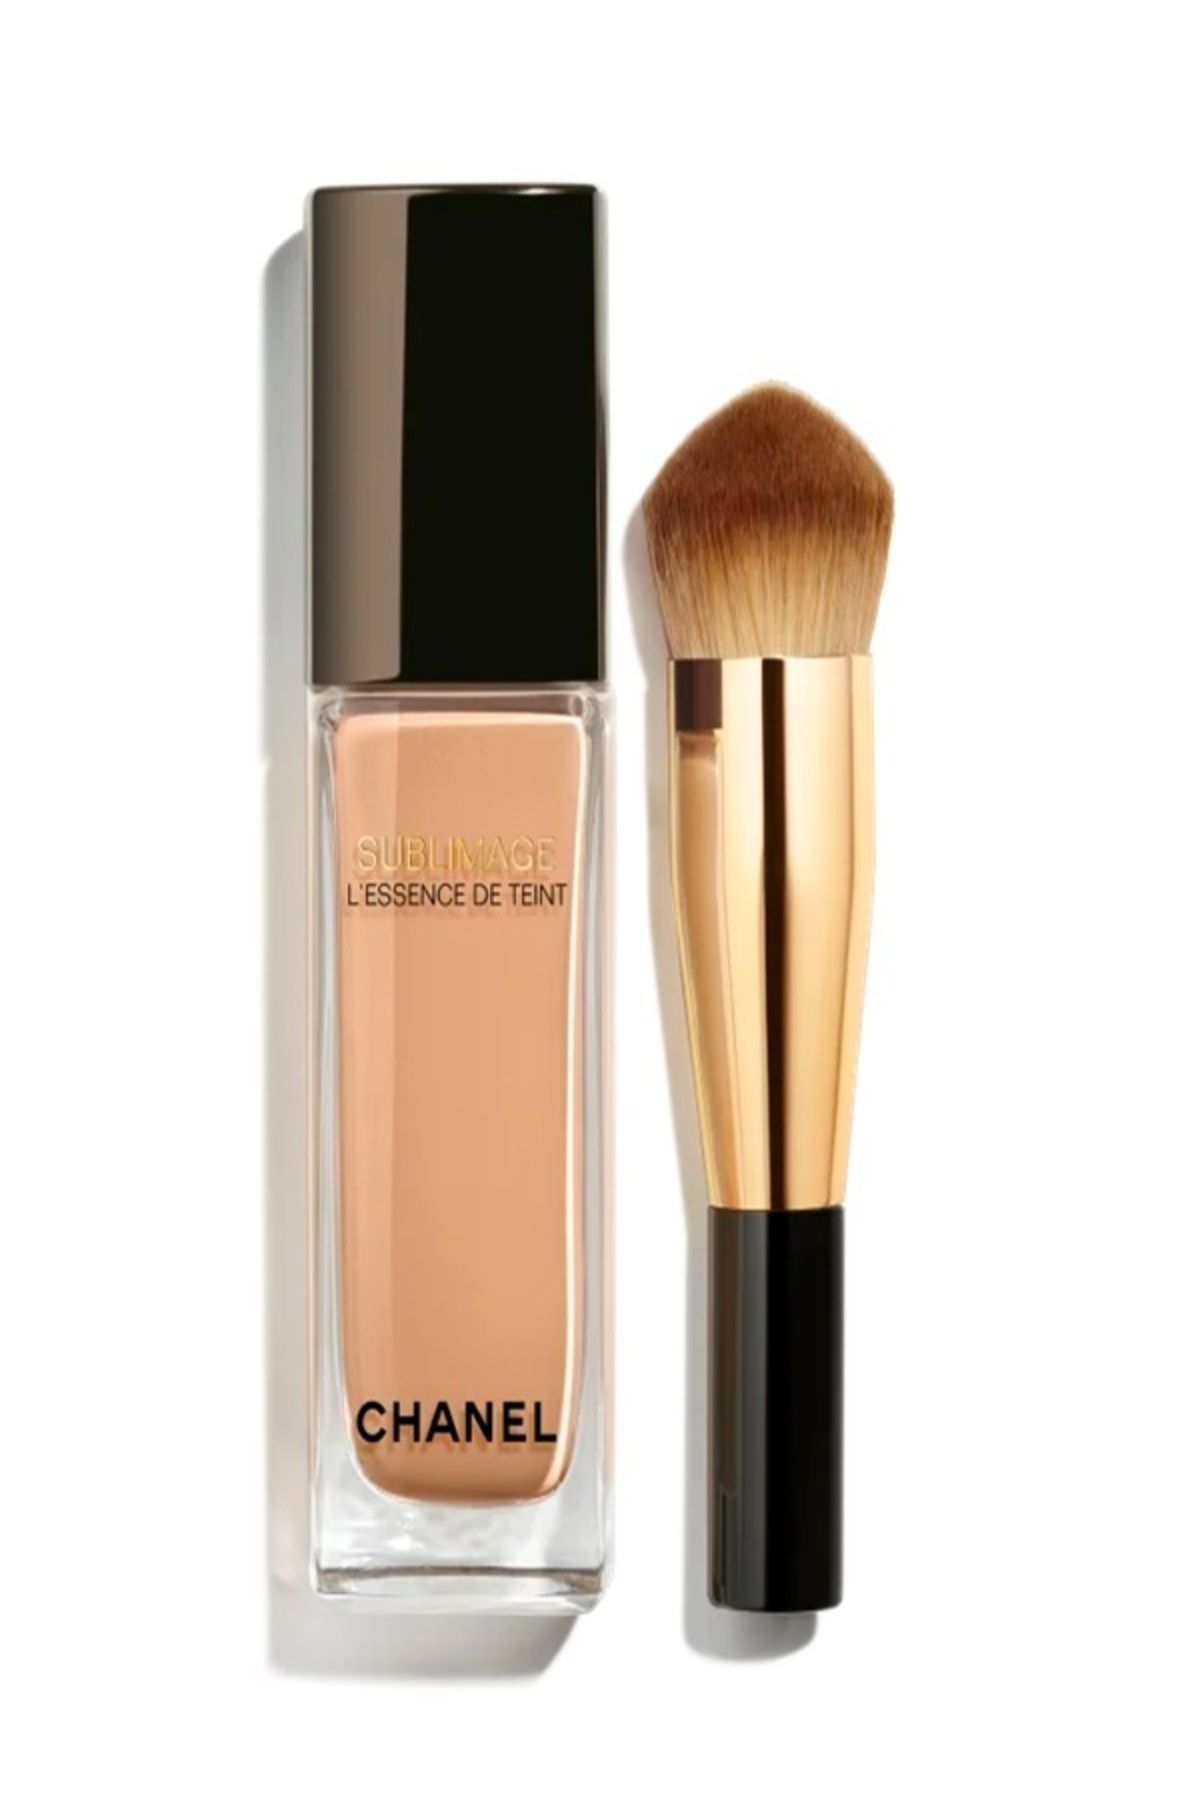 Chanel سرم مرطوب کننده کرم پودر رنگی SUBLIMAGE L'ESSENCE DE TEINT زیبایی و جذابیت بی نظیر برای پوست شما شماره BD21